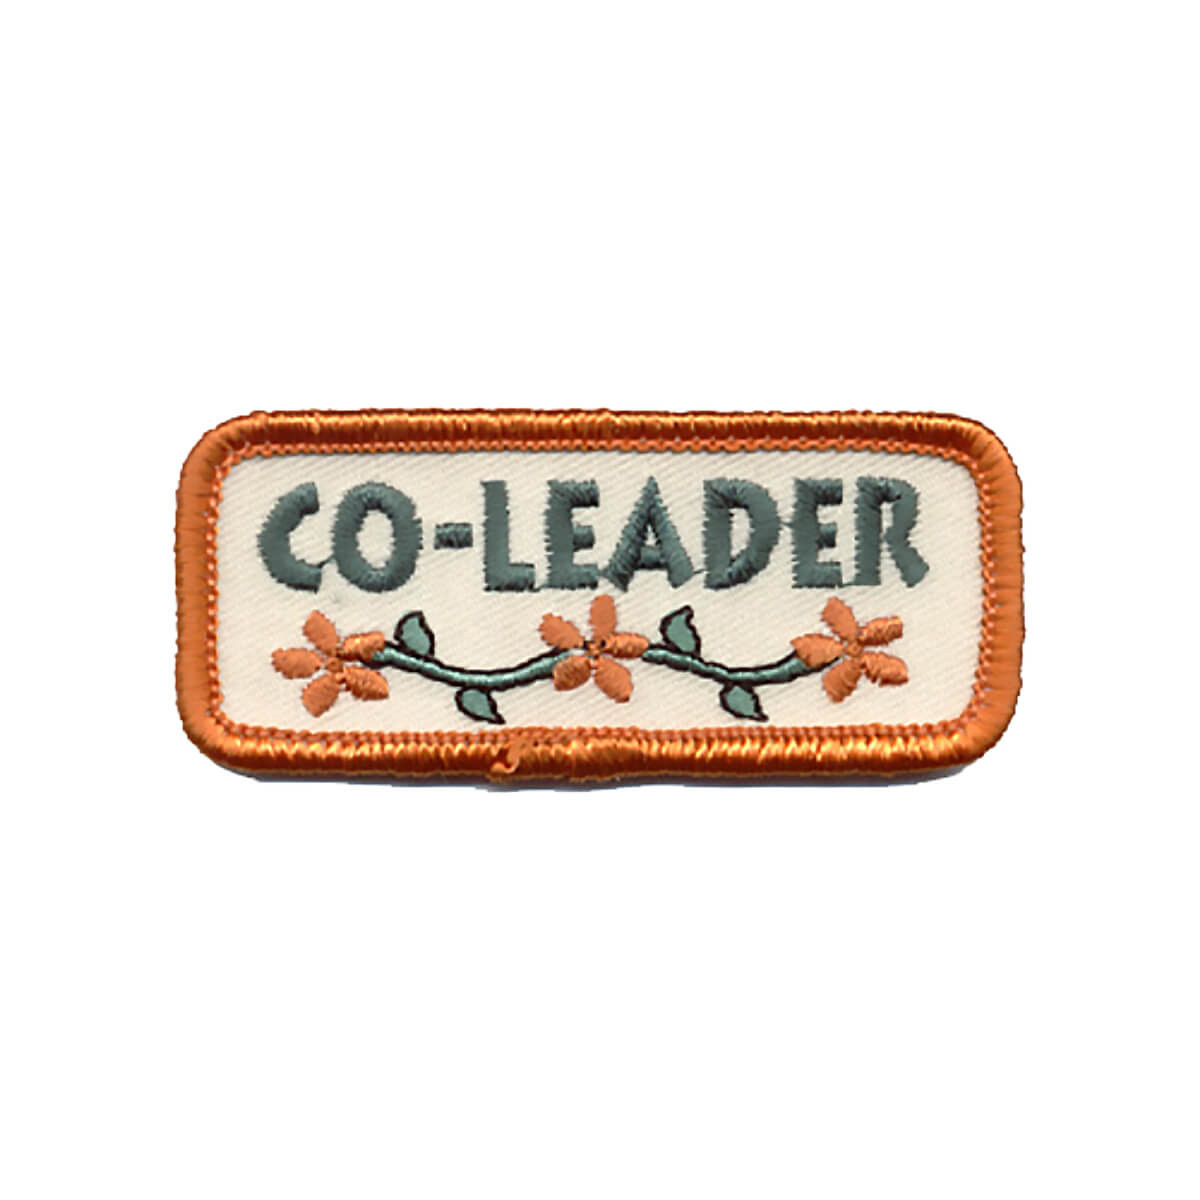 Co Leader - W